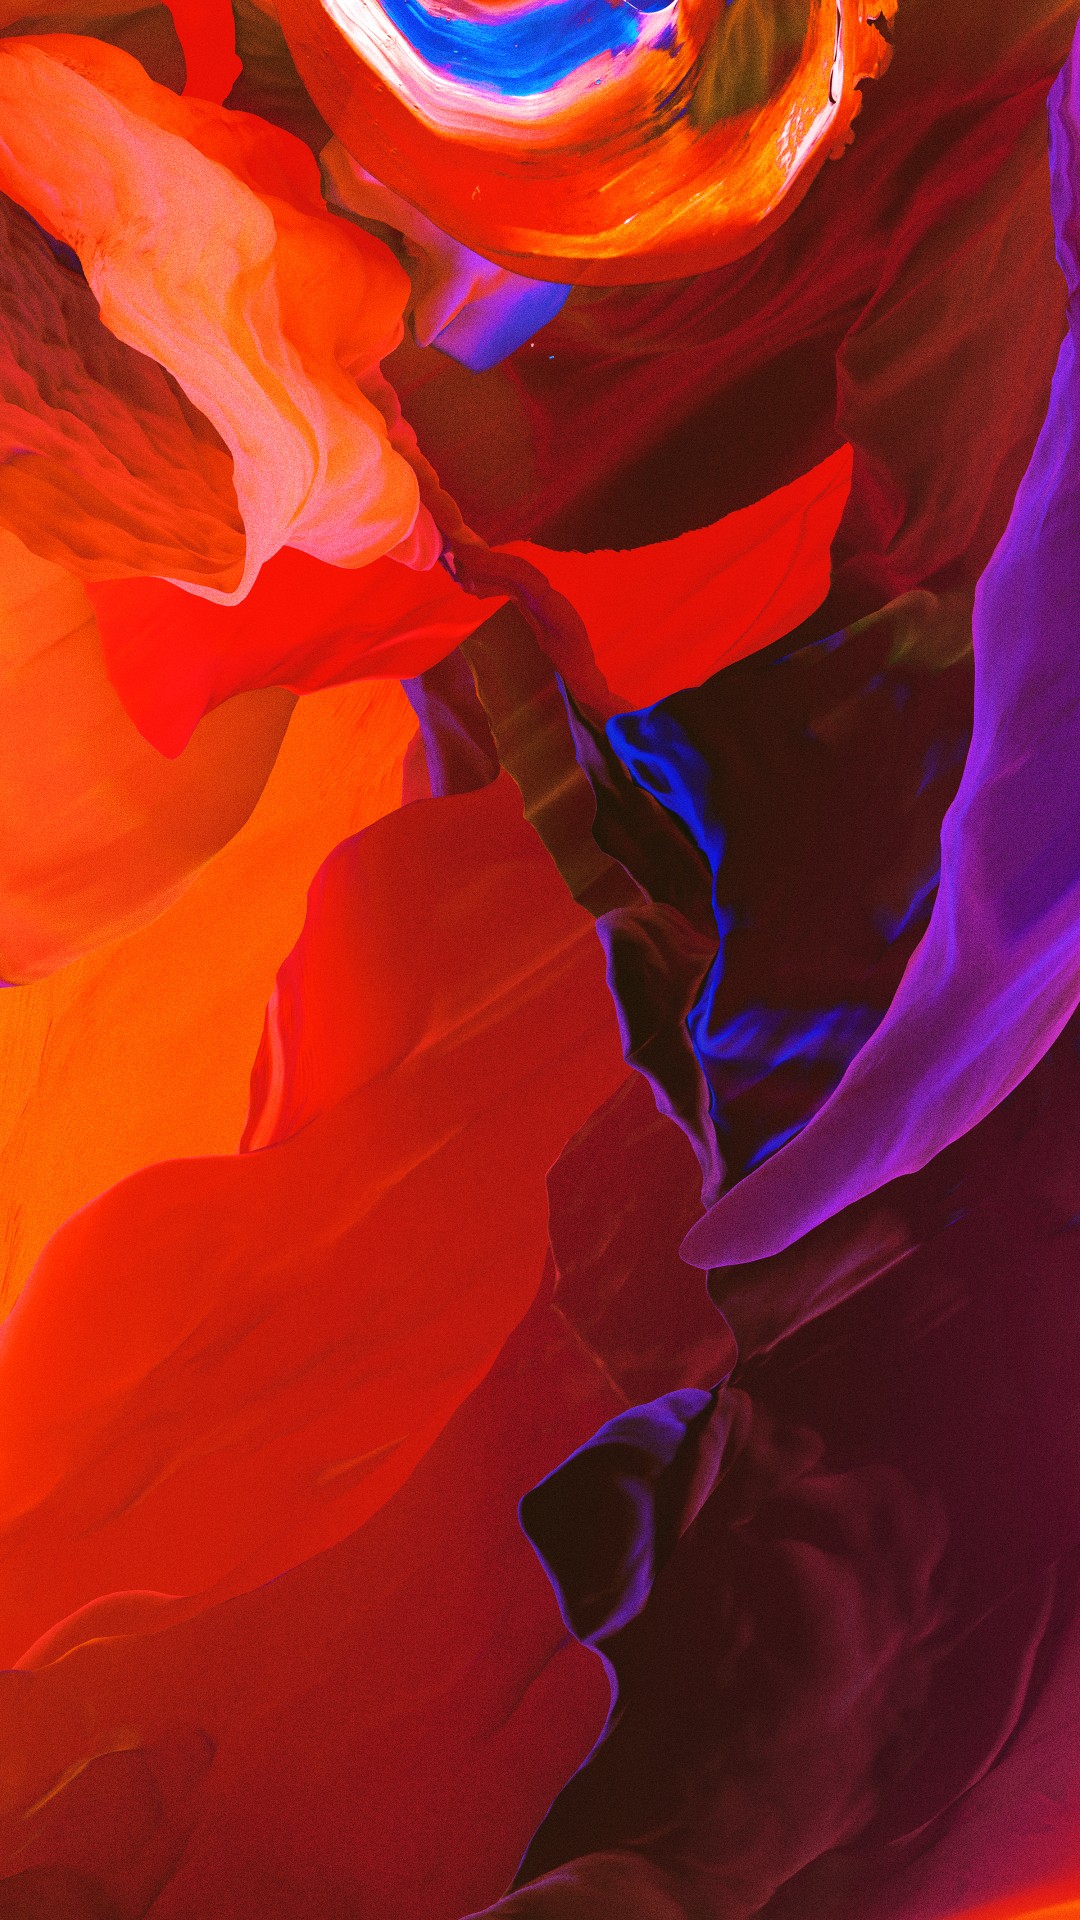 8k abstract wallpaper,red,orange,purple,canyon,illustration